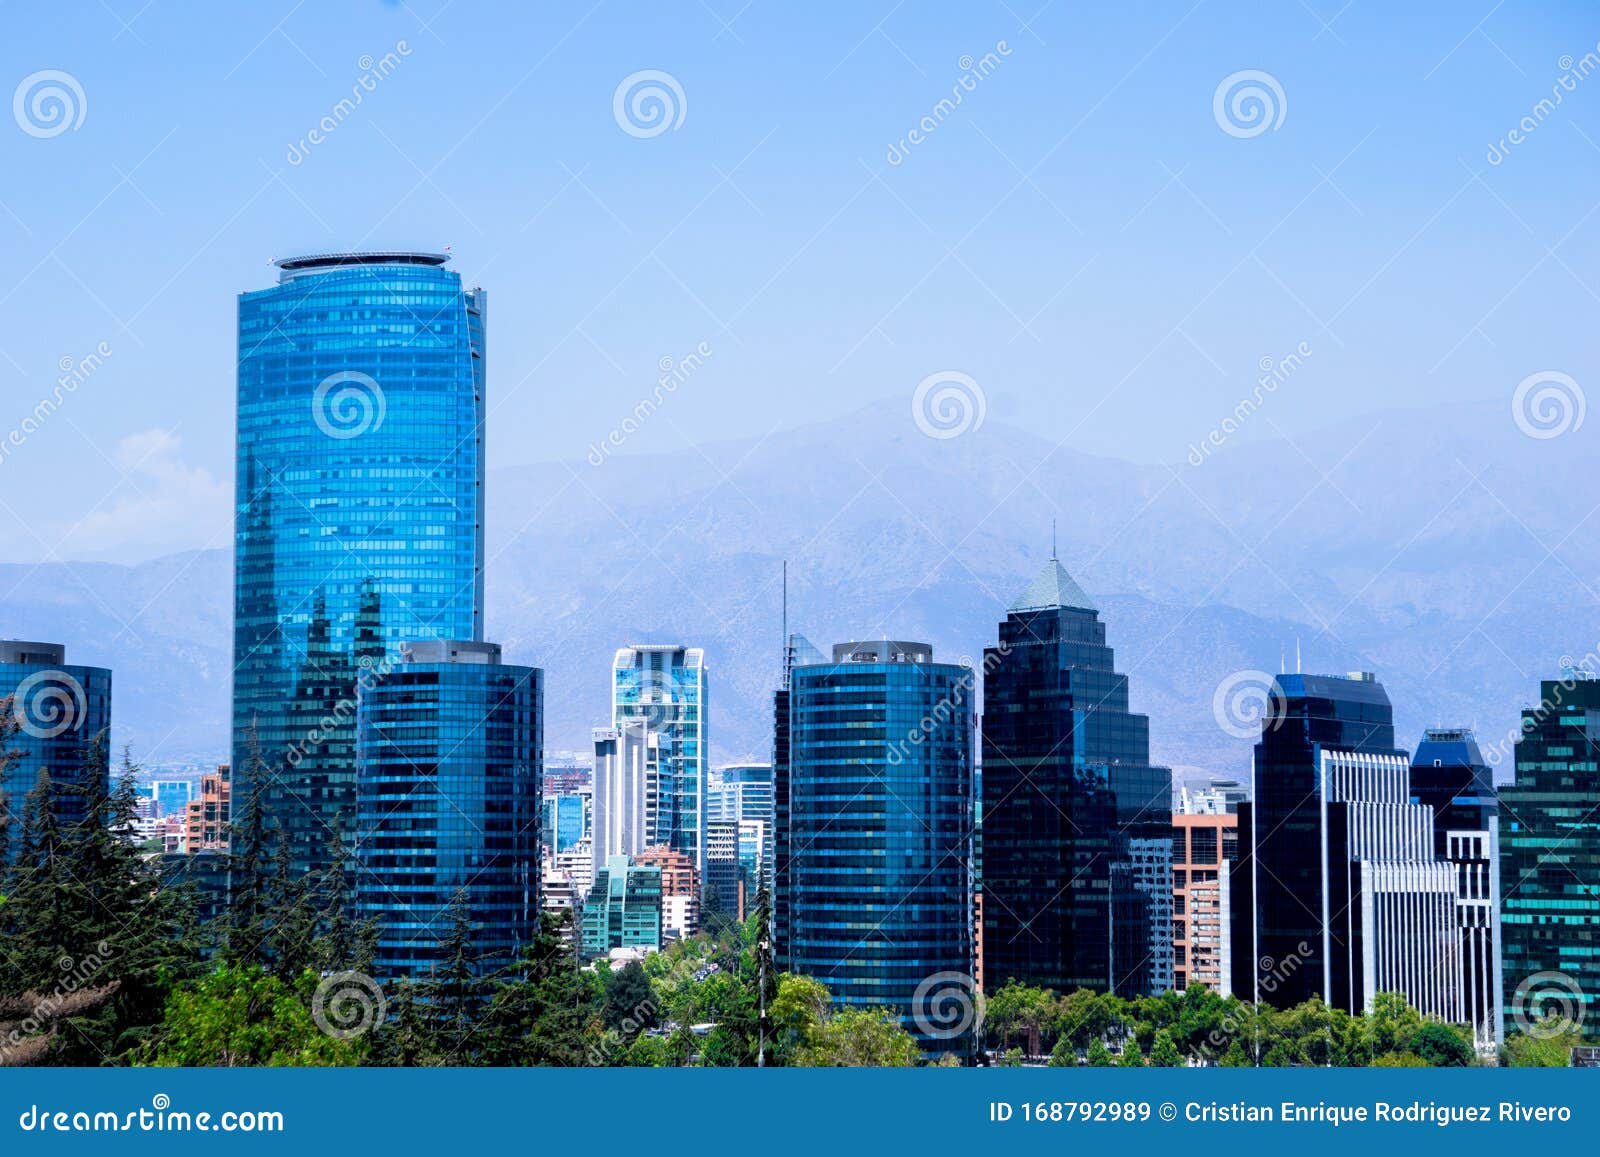 view of the financial center of santiago de chile